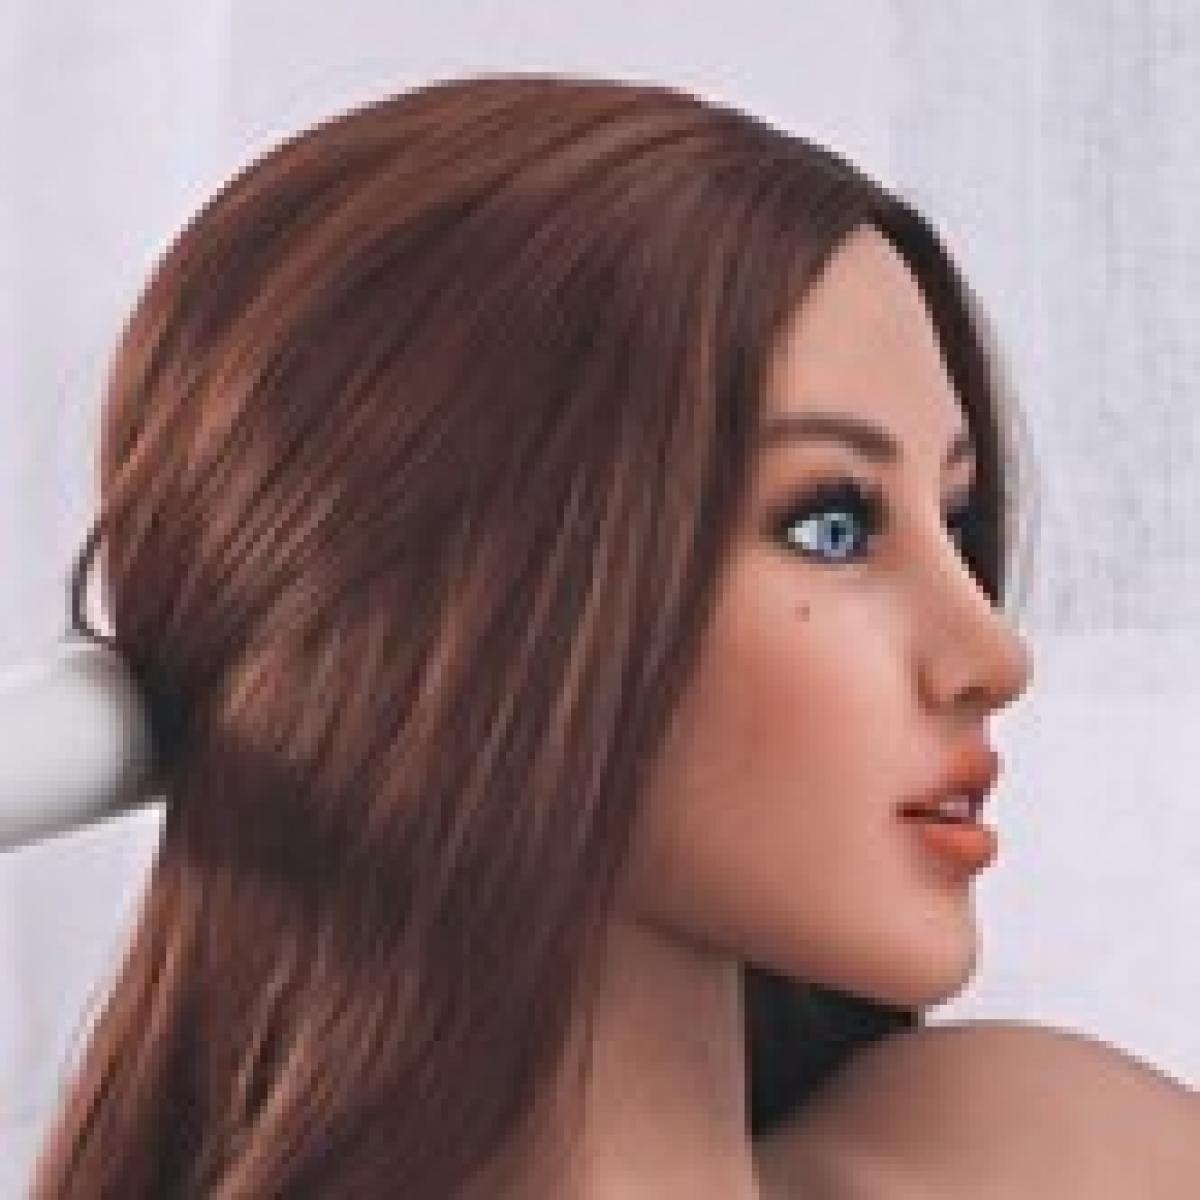 Neodoll Racy Cecelia Head - Sex Doll Head - M16 Compatible – Brown